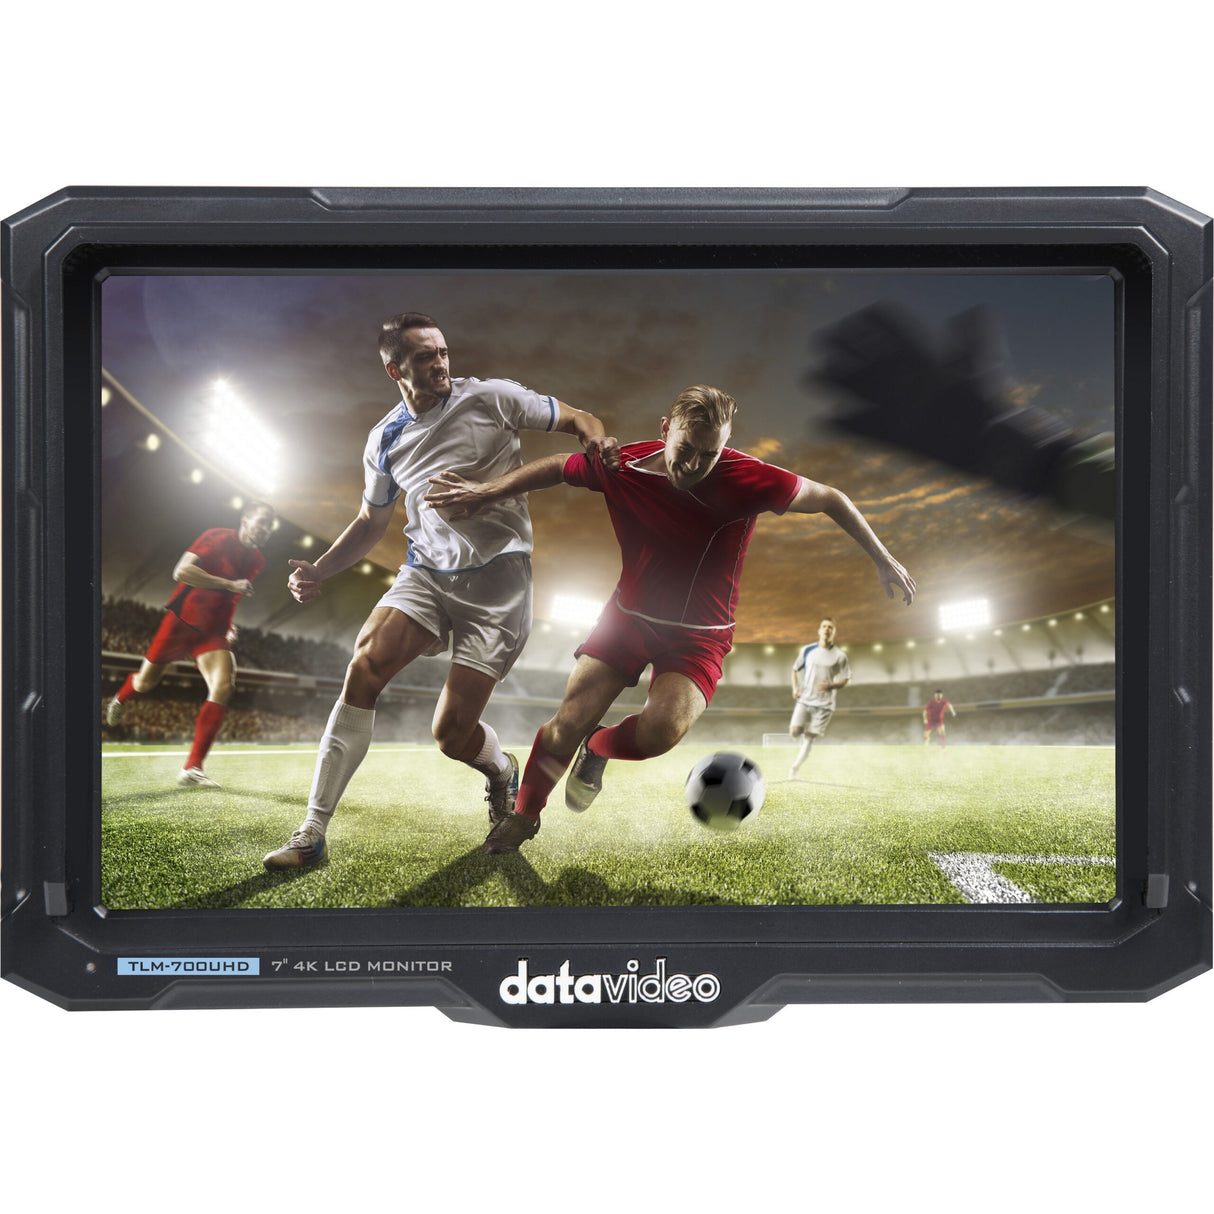 Datavideo TLM-700UHD 7-Inch 4K LCD Monitor